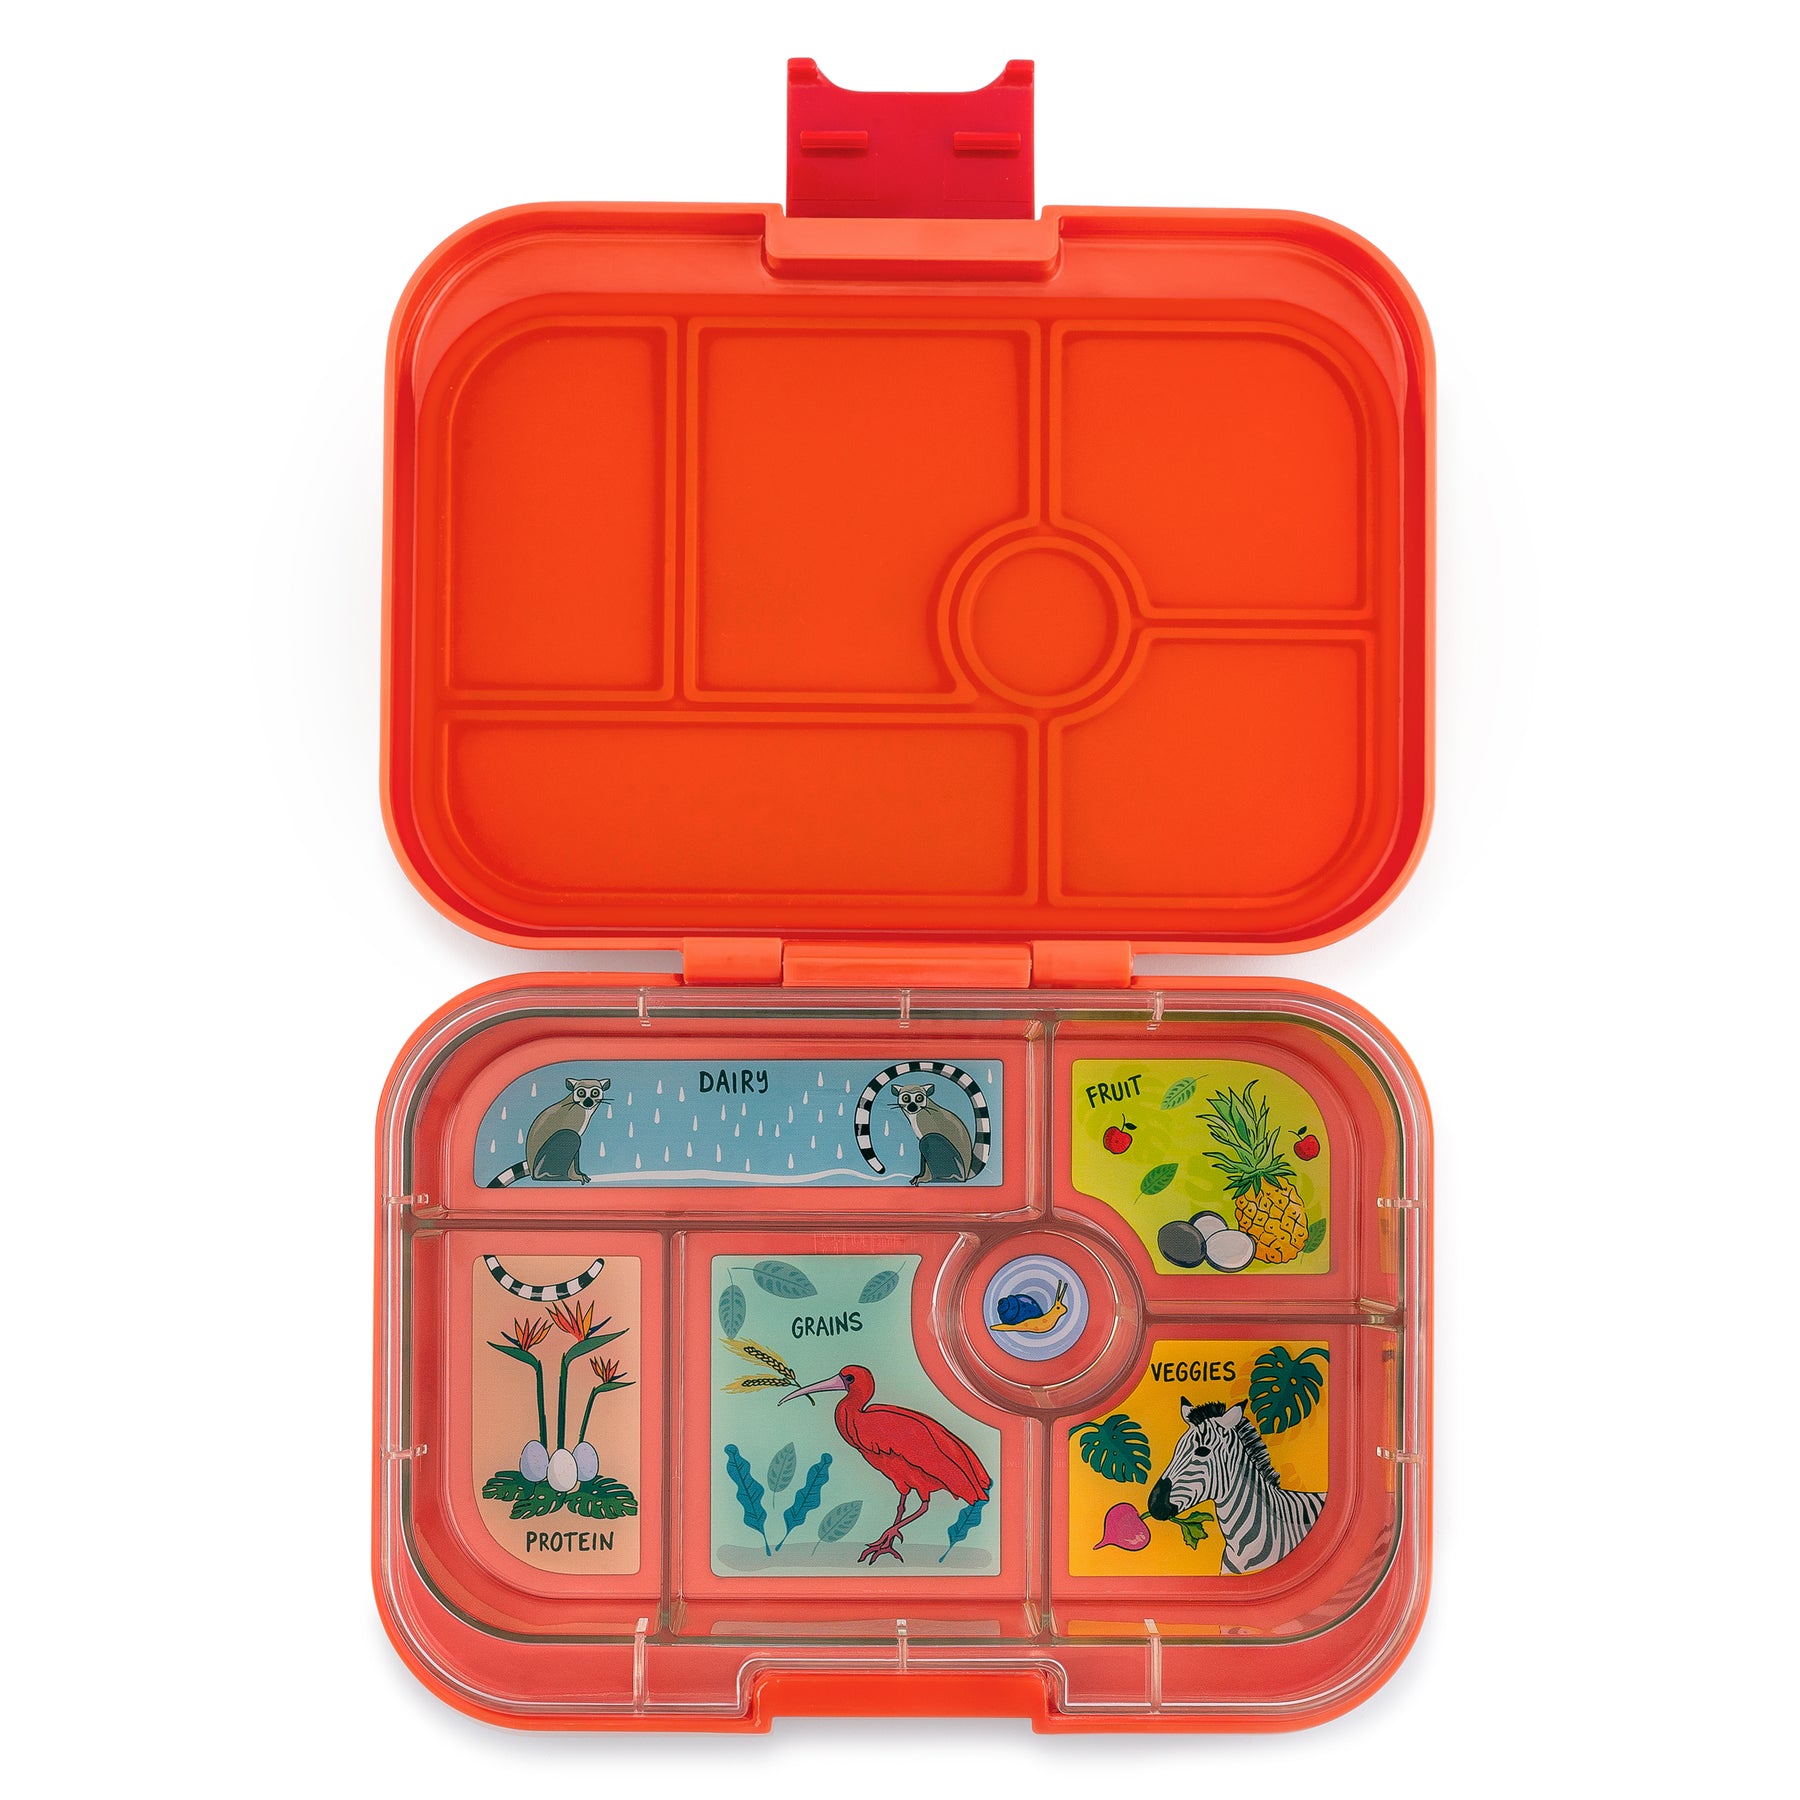 Machtig Encyclopedie deze Leakproof Bento Box for Kids - Yumbox Safari Orange